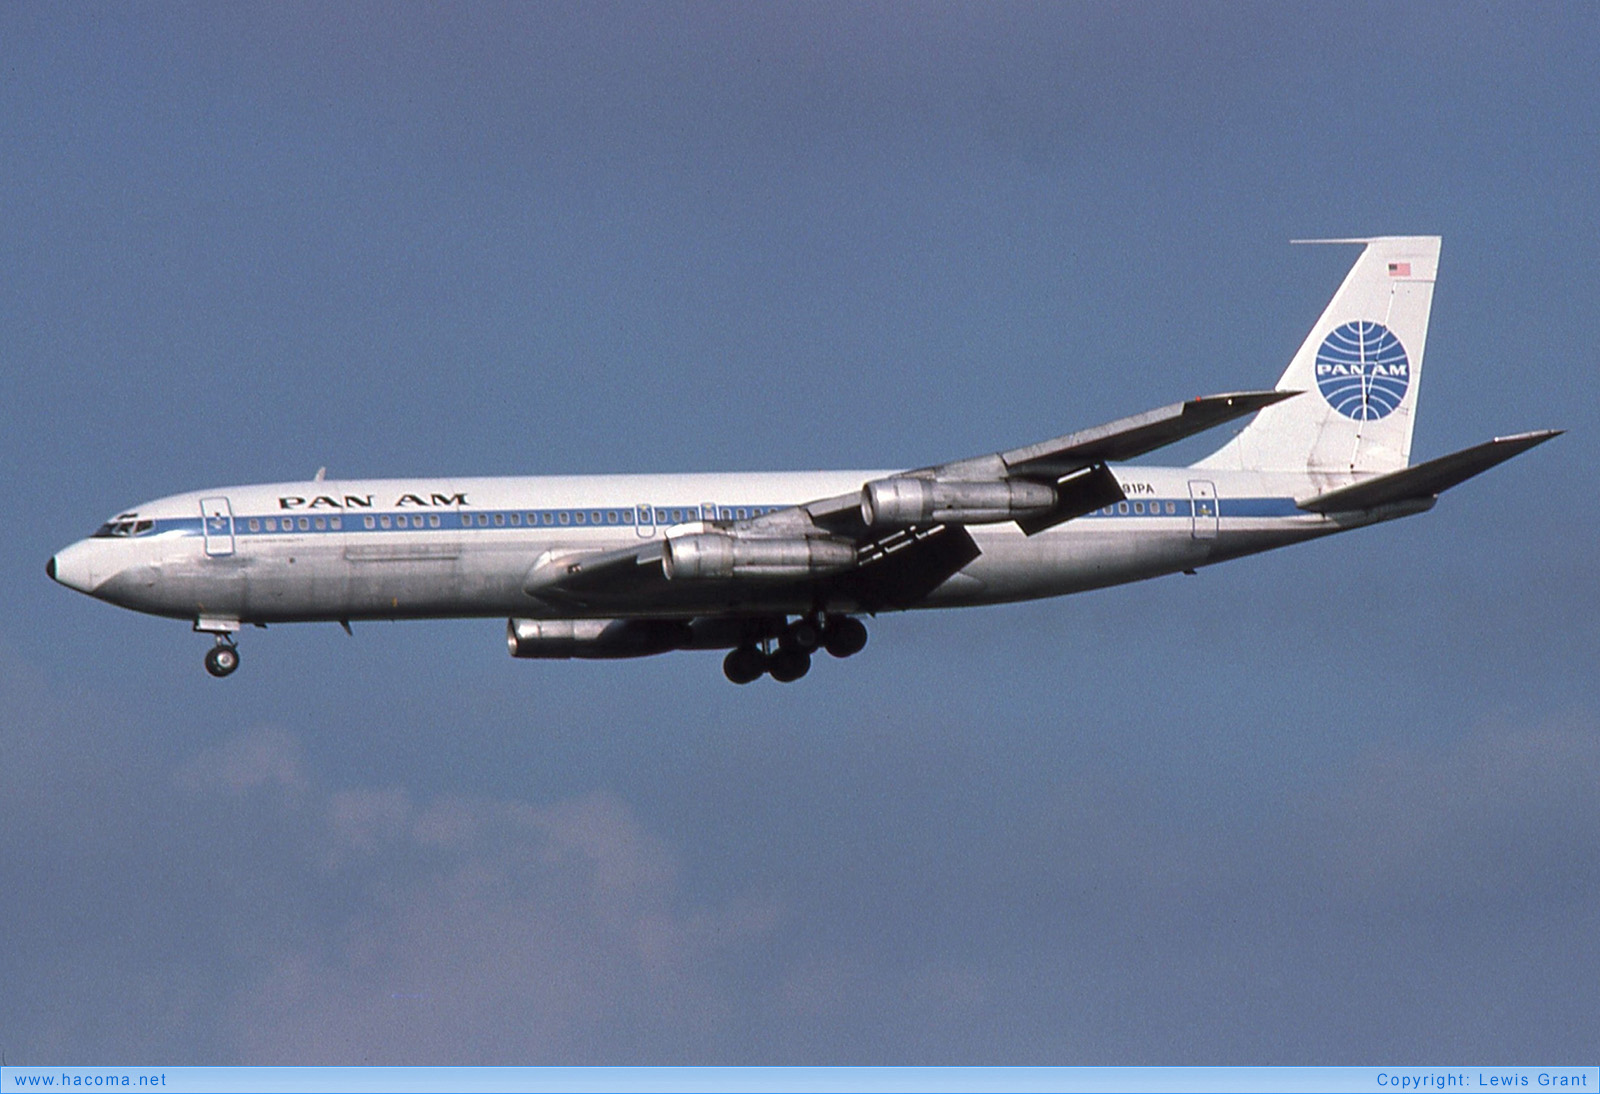 Photo of N791PA - Pan Am Clipper Fidelity - London Heathrow Airport - Nov 2, 1975